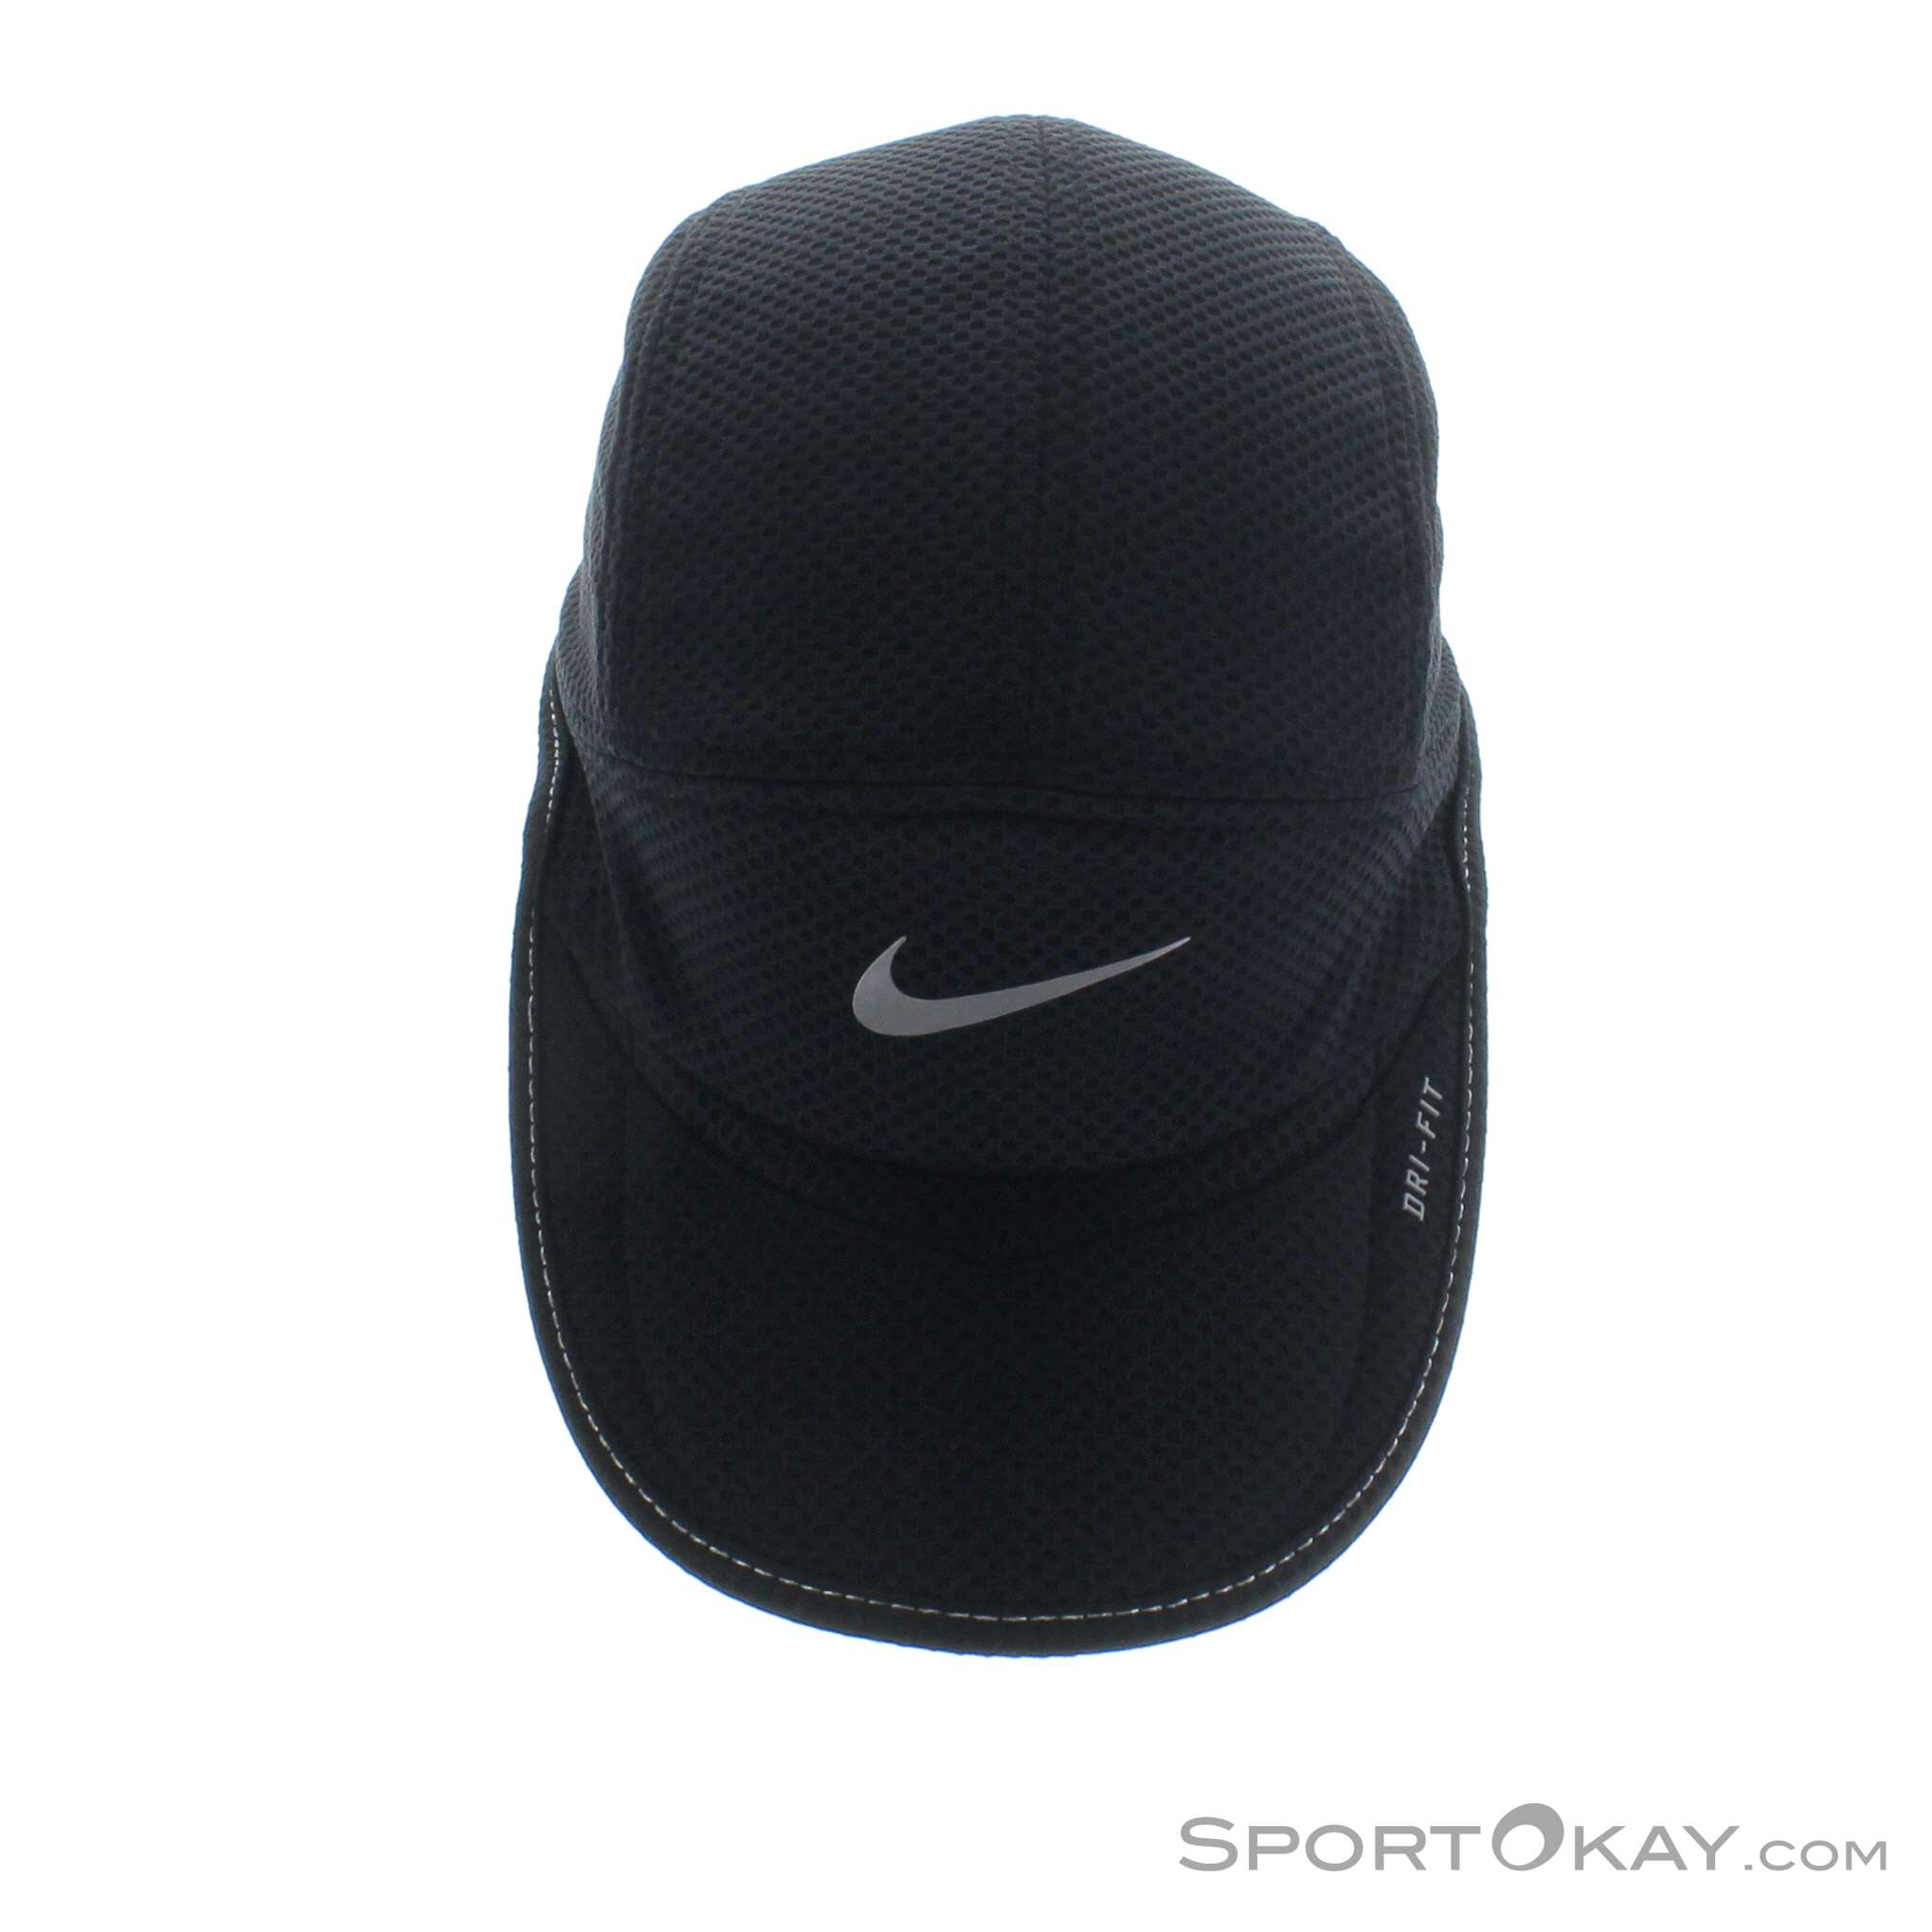 Duque Independencia luz de sol Nike Mesh Daybreak Hat Baseball Cap - Caps & Headbands - Outdoor Clothing -  Outdoor - All